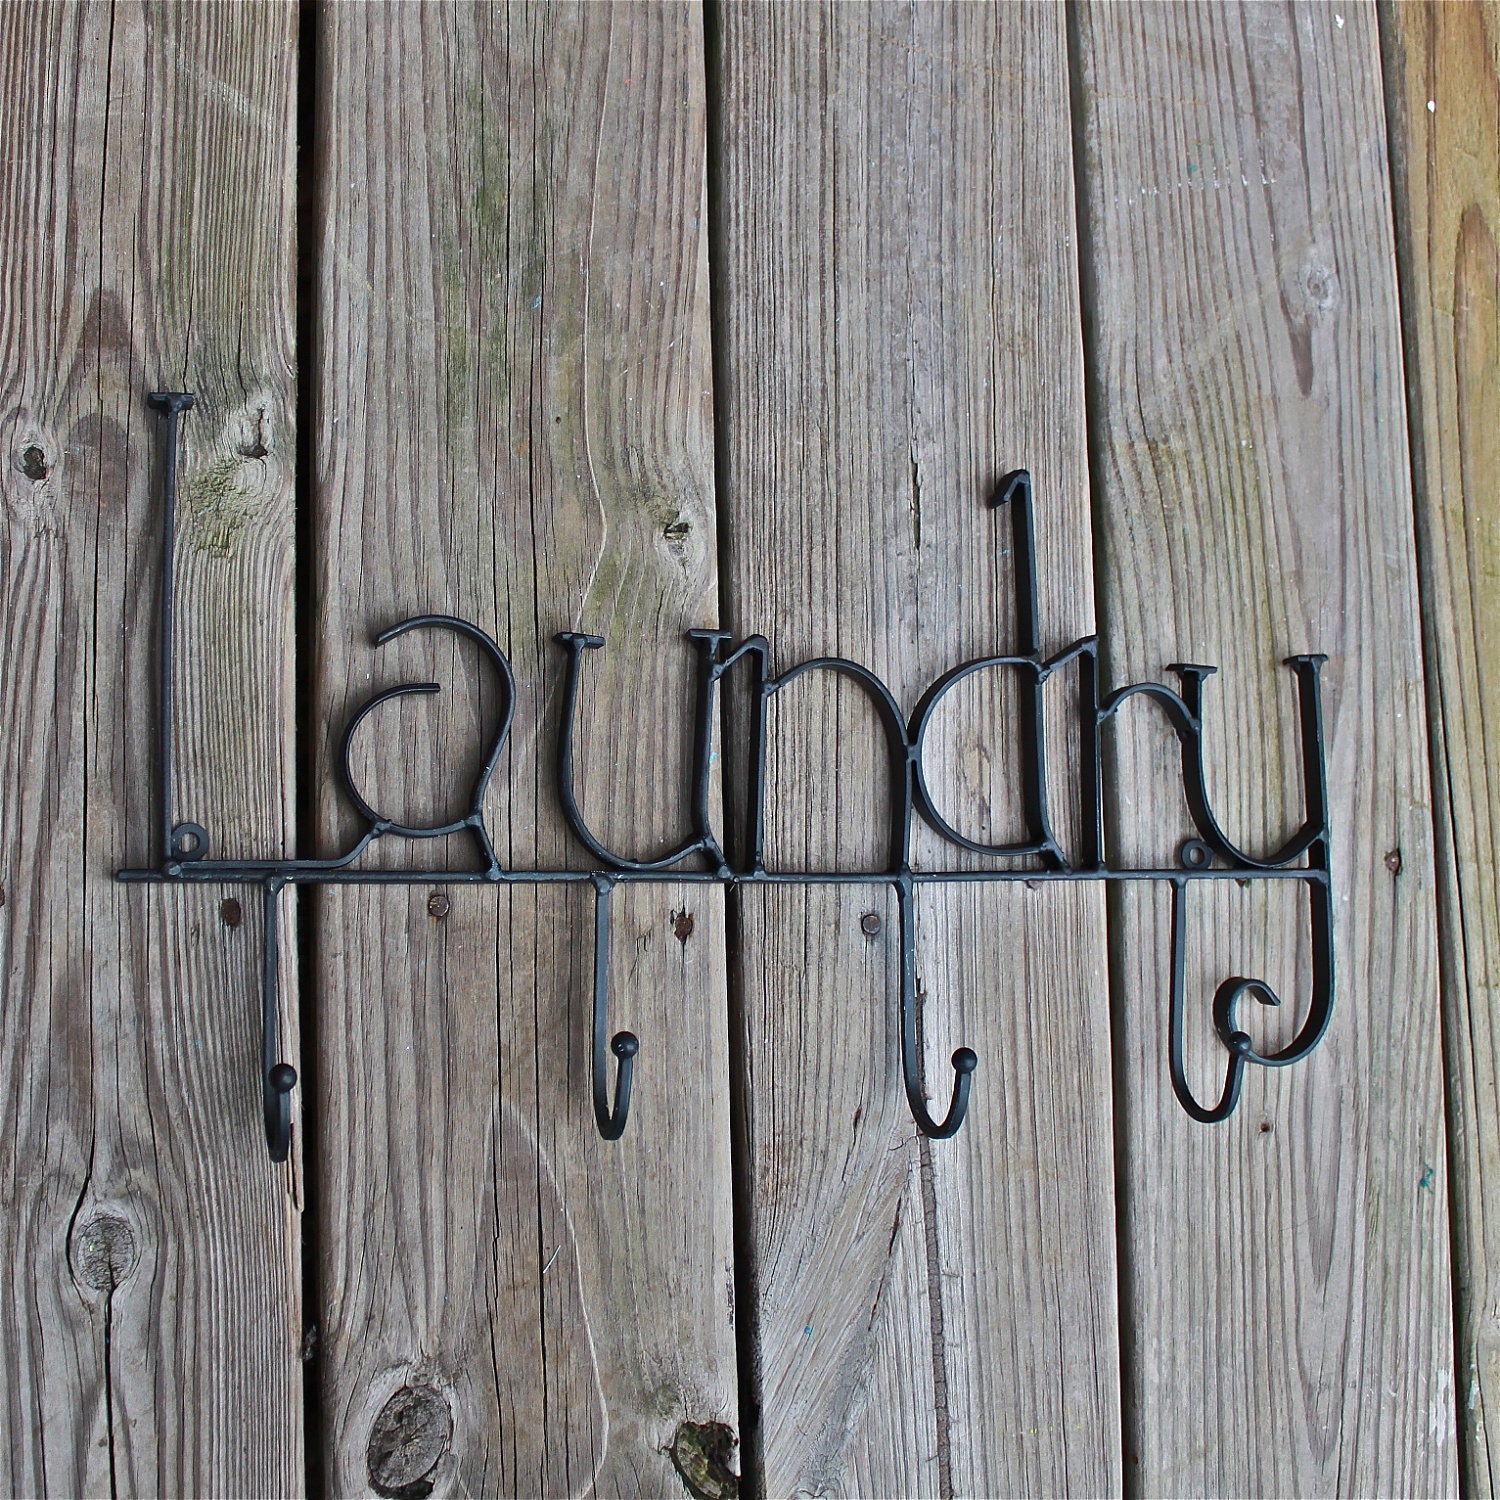 LAUNDRY Metal Wall Hook/ Black/ Laundry Room Bag by AquaXpressions